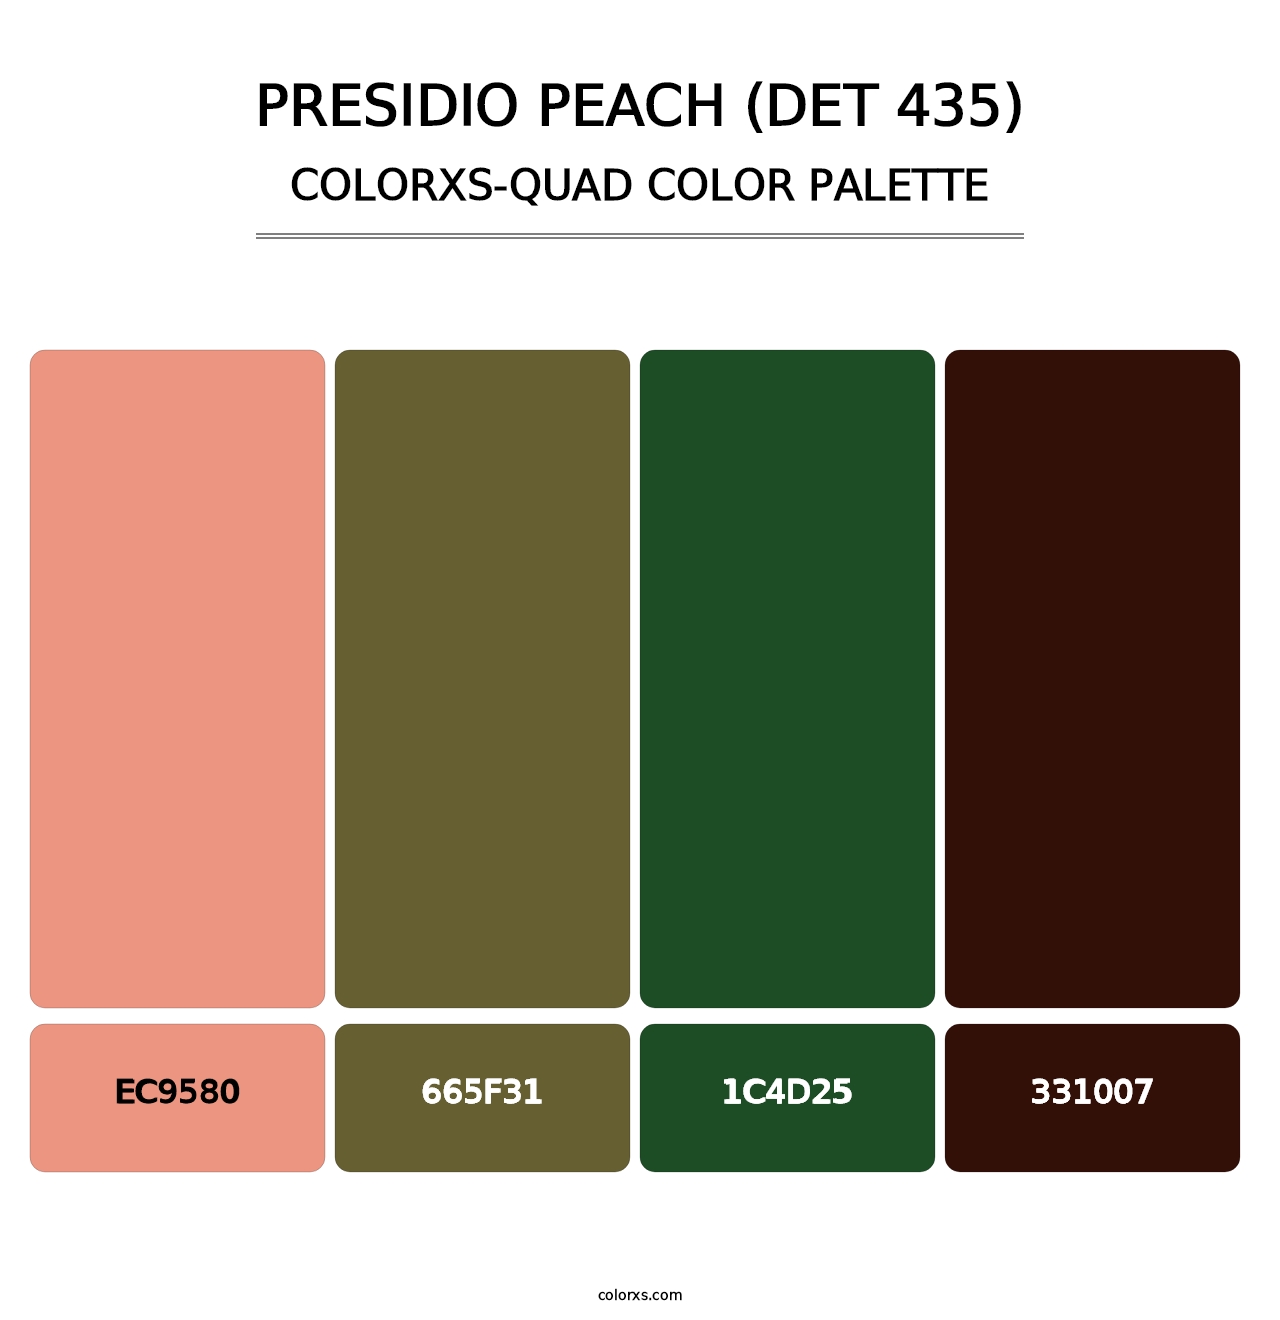 Presidio Peach (DET 435) - Colorxs Quad Palette